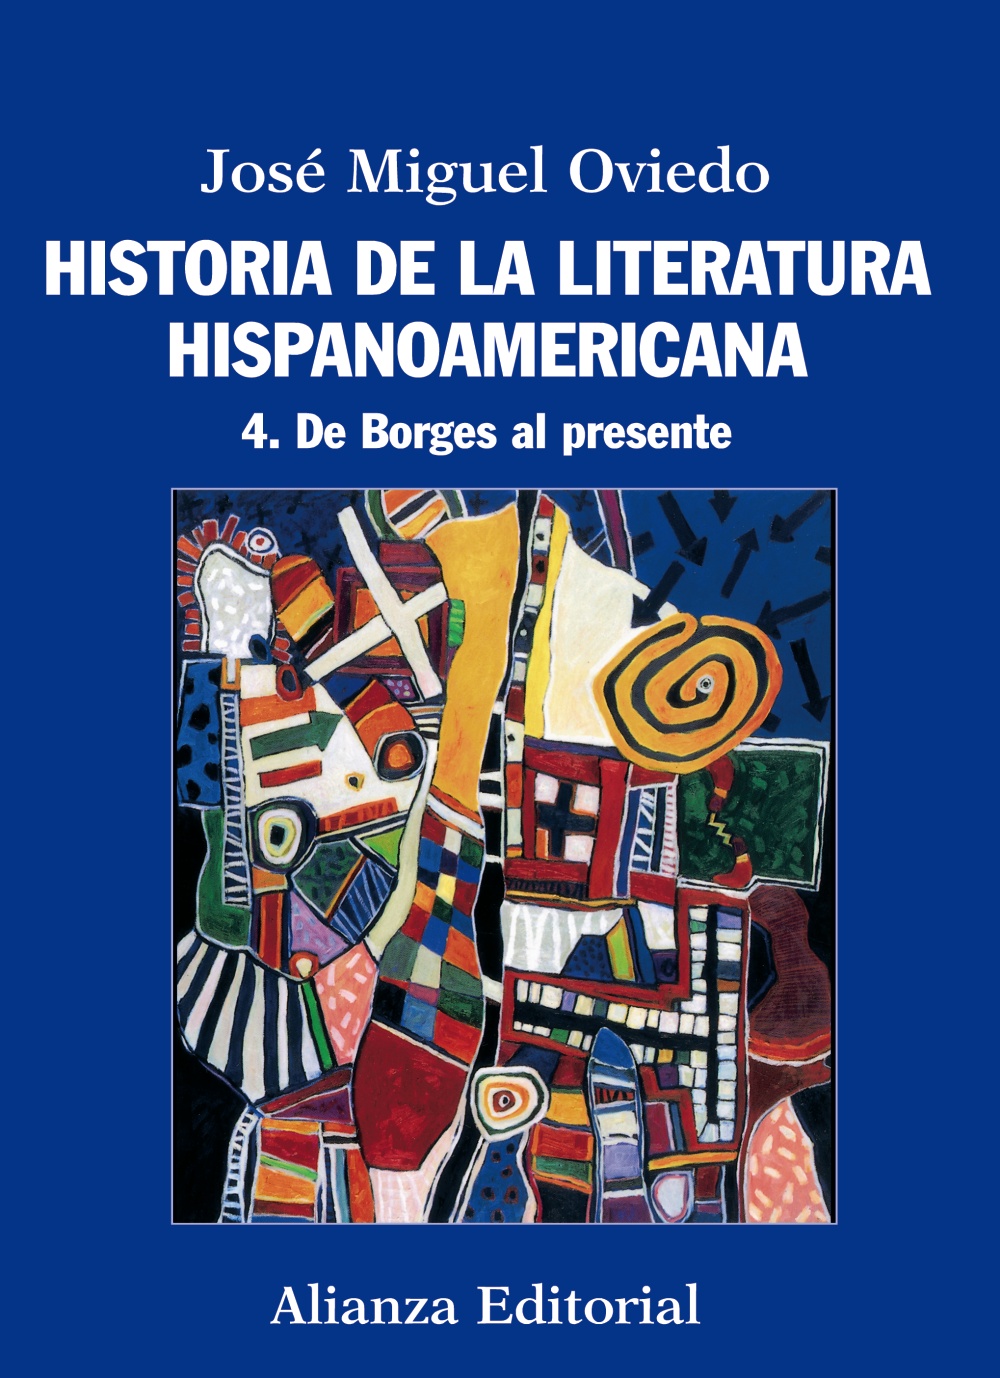 físicamente el primero clima Historia de la literatura hispanoamericana - Alianza Editorial